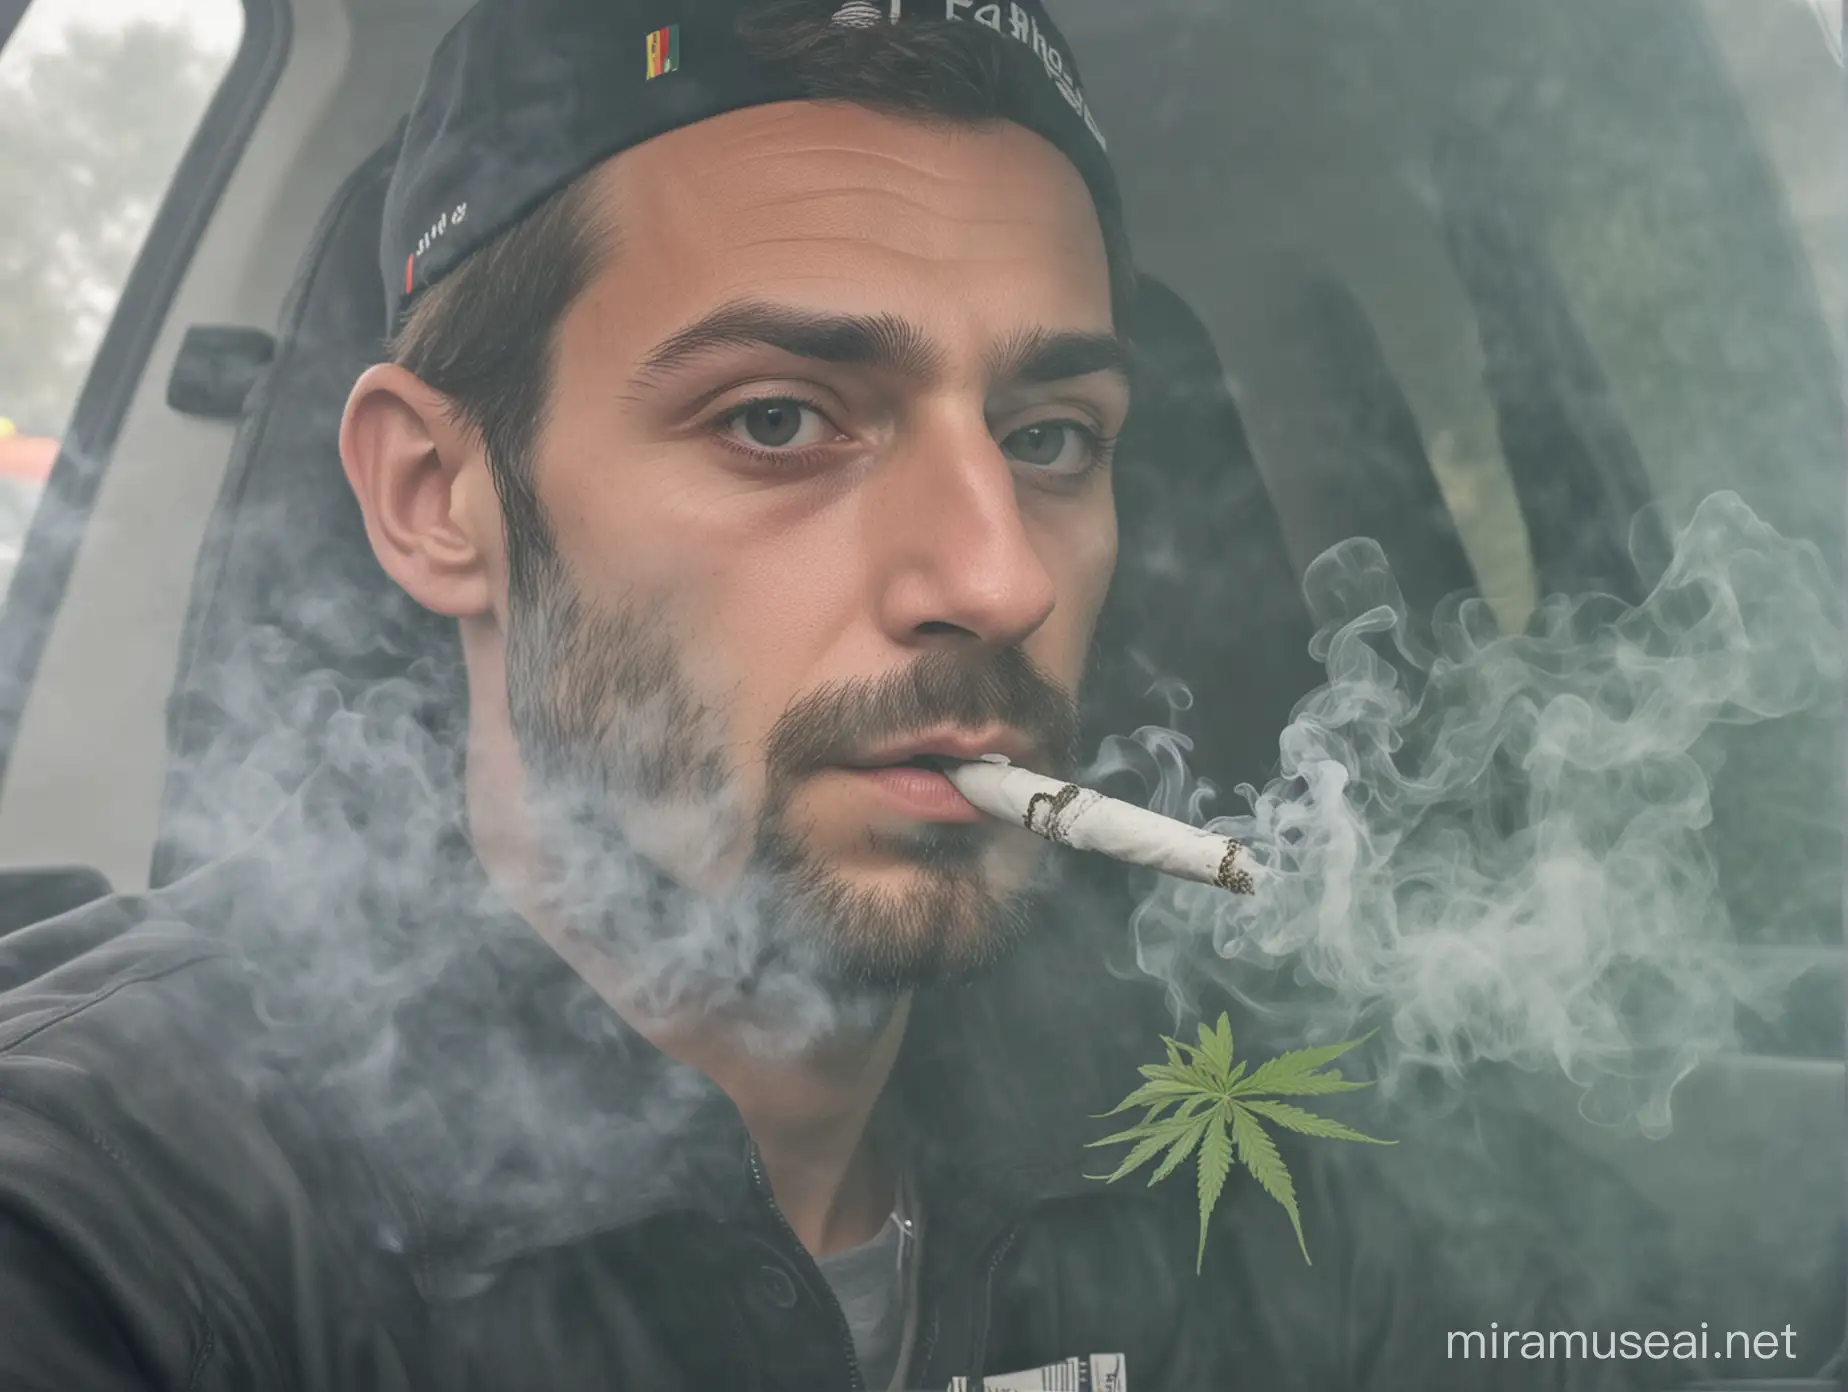 German driver smoke cannabis
